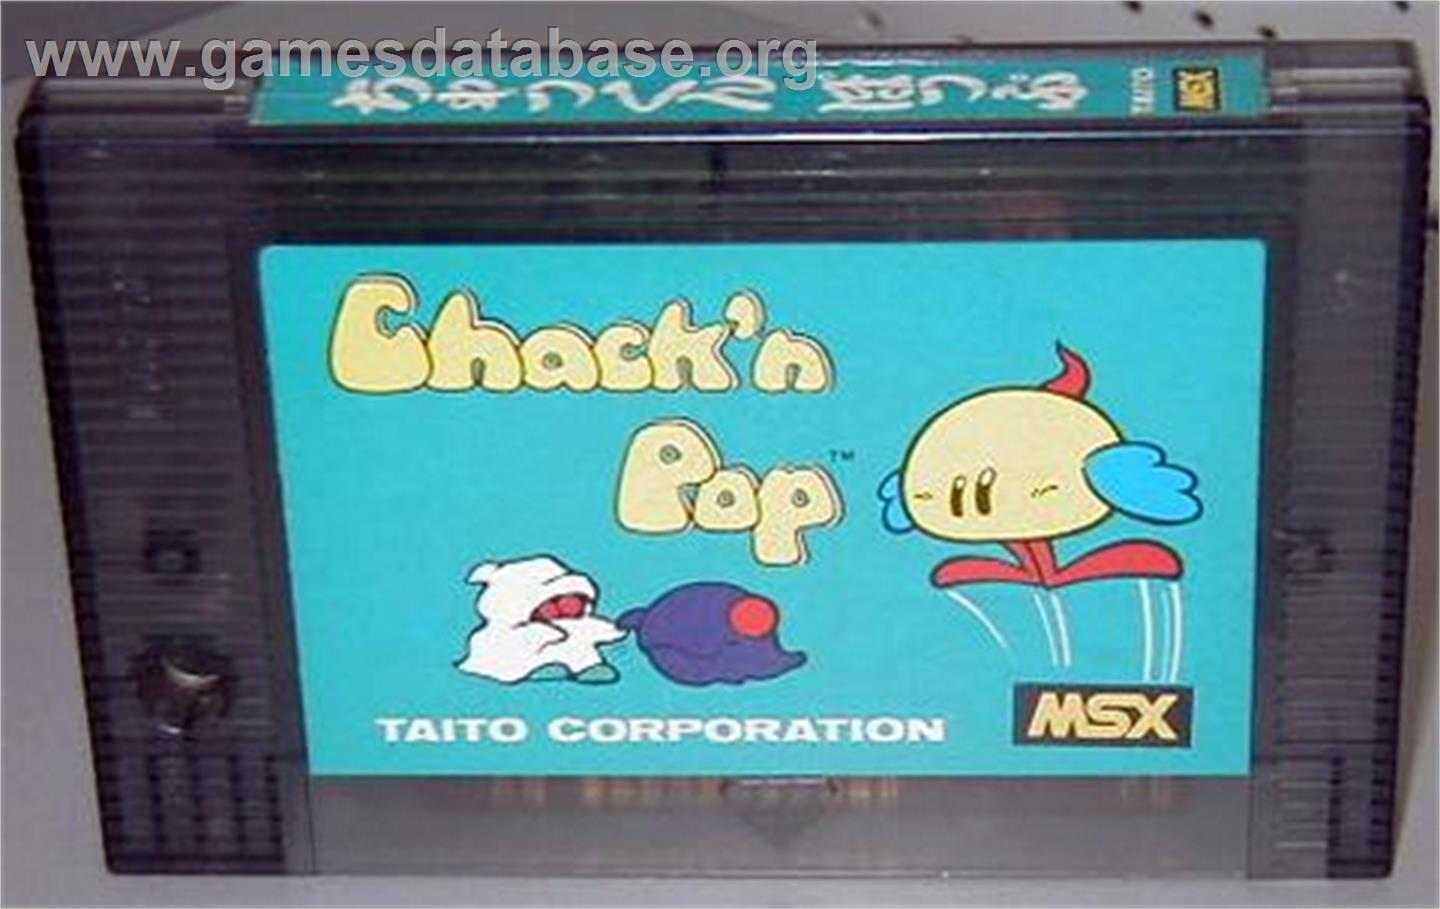 Chack'n Pop - MSX - Artwork - Cartridge